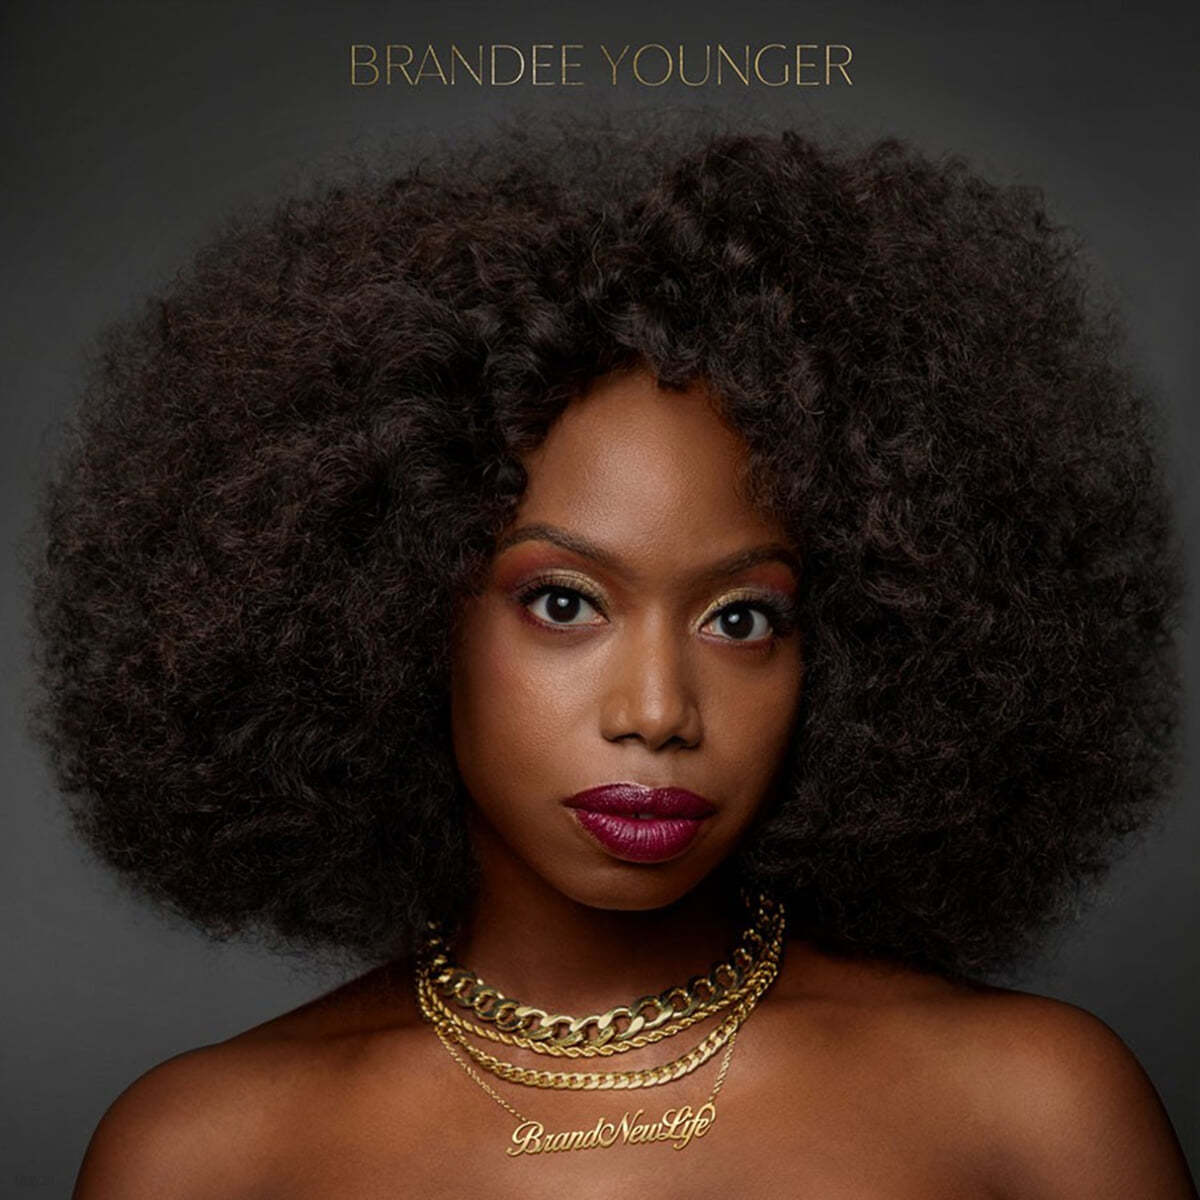 Brandee Younger (브랜디 영거) - Brand New Life